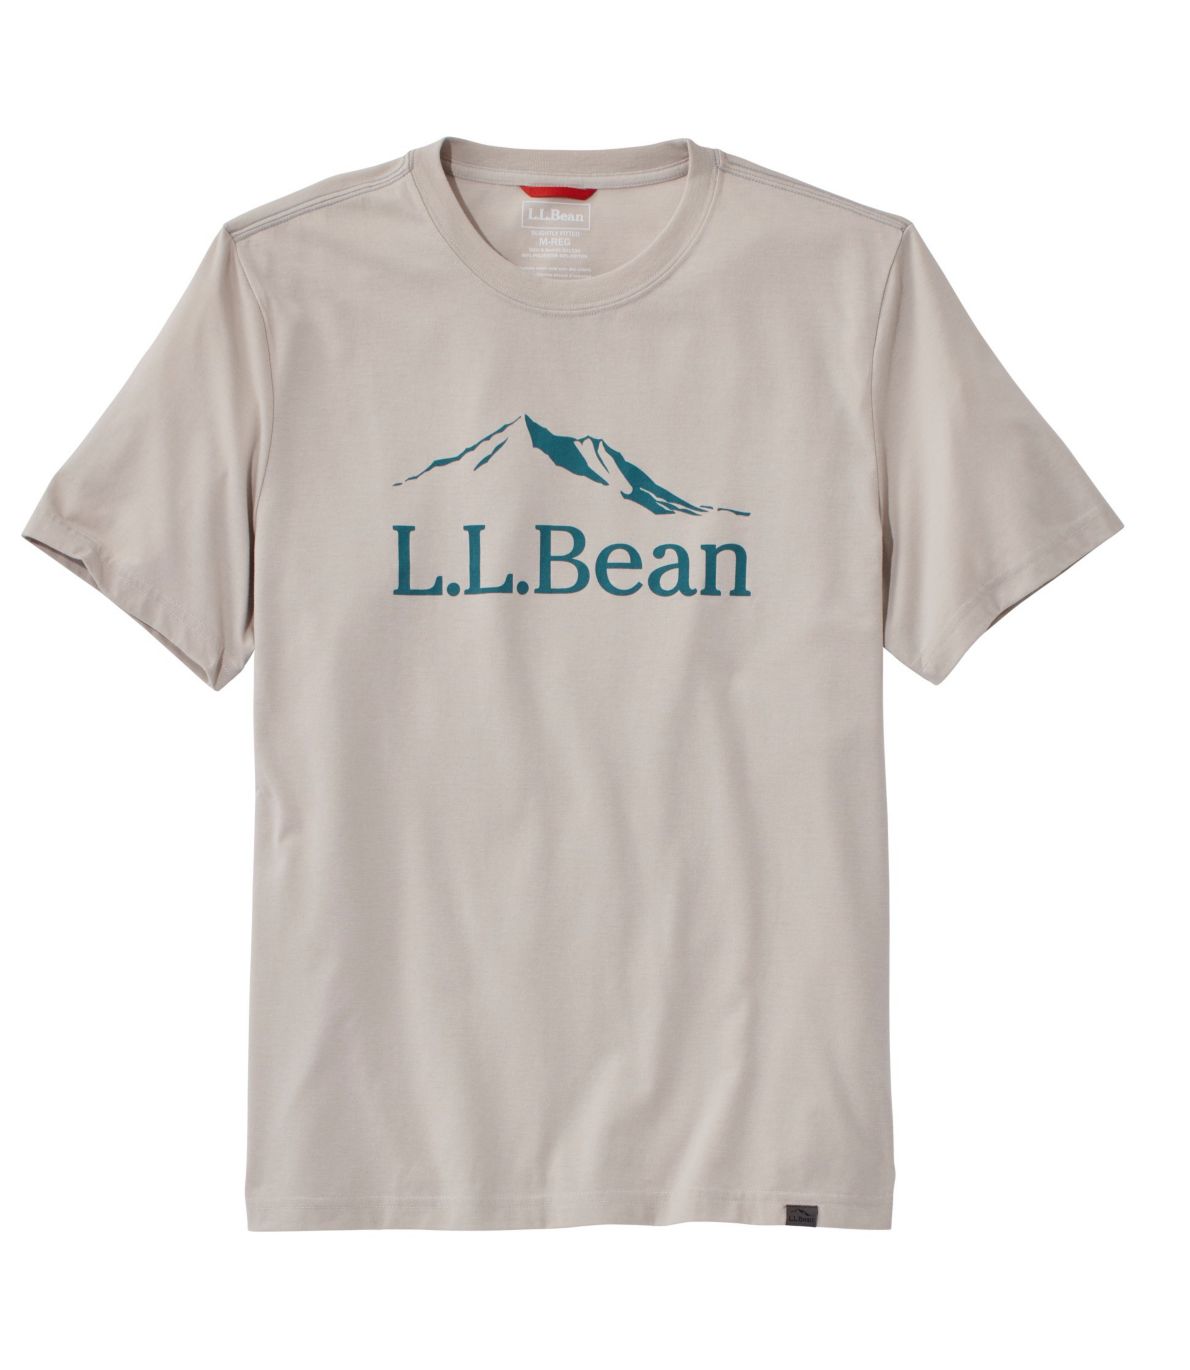 Men's L.L.Bean Performance Graphic Tee, Short-Sleeve